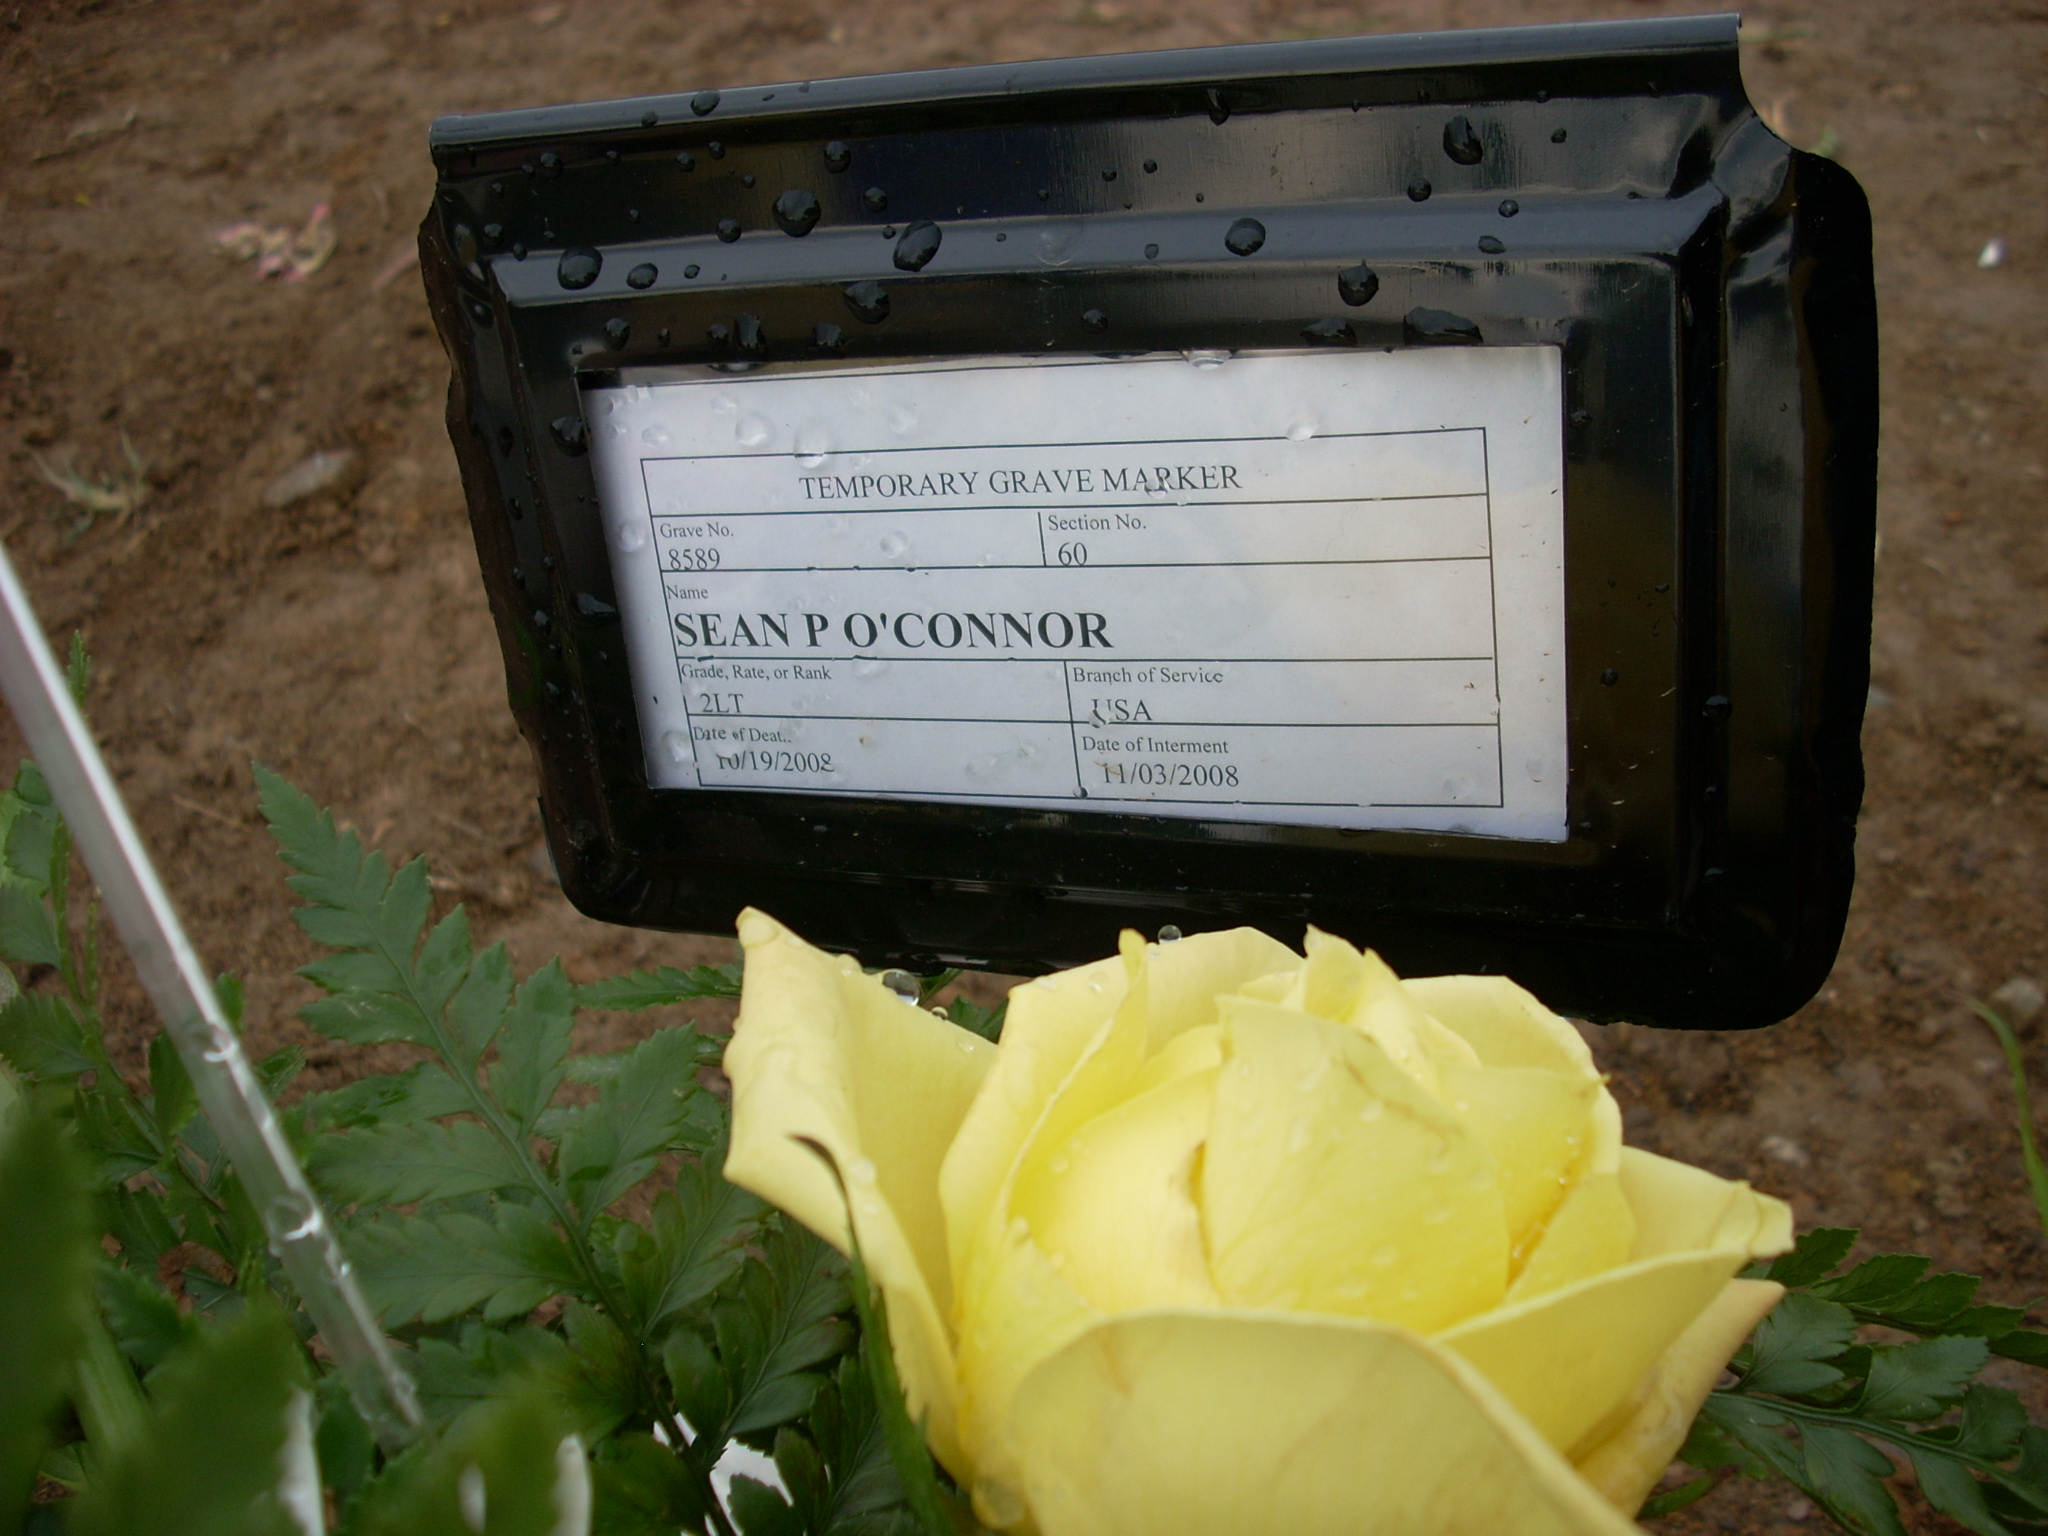 spoconnor-gravesite-photo-february-2009-001